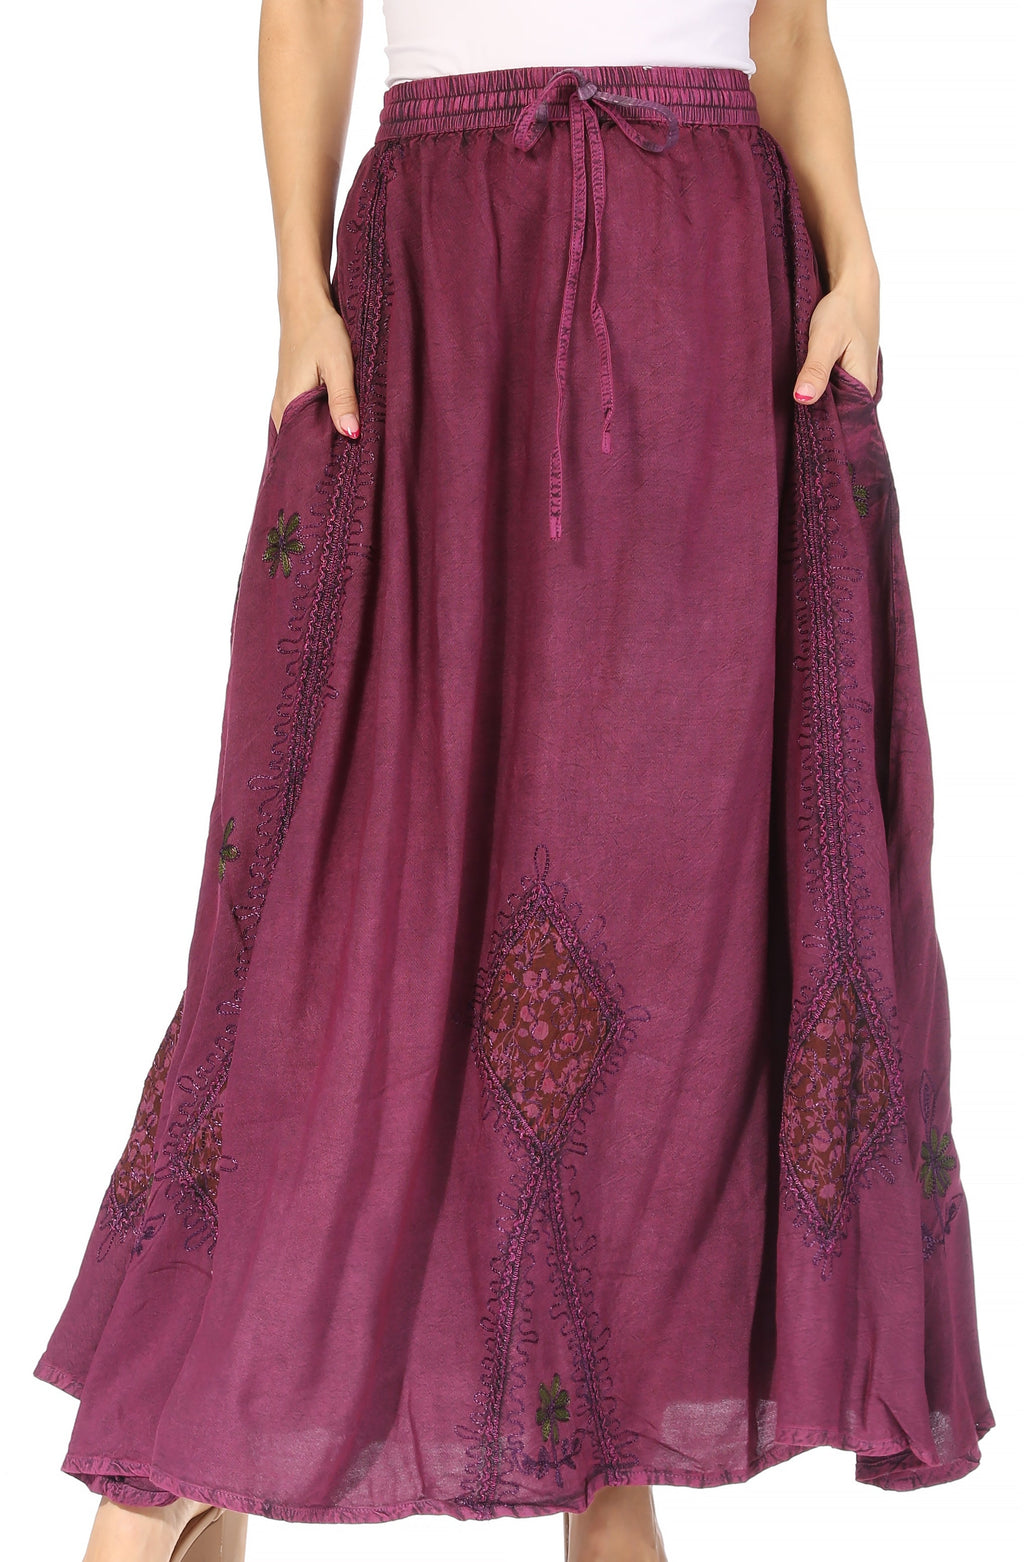 Sakkas Zarah Women's Boho Embroidery Gypsy Skirt with Lace Elastic Wai